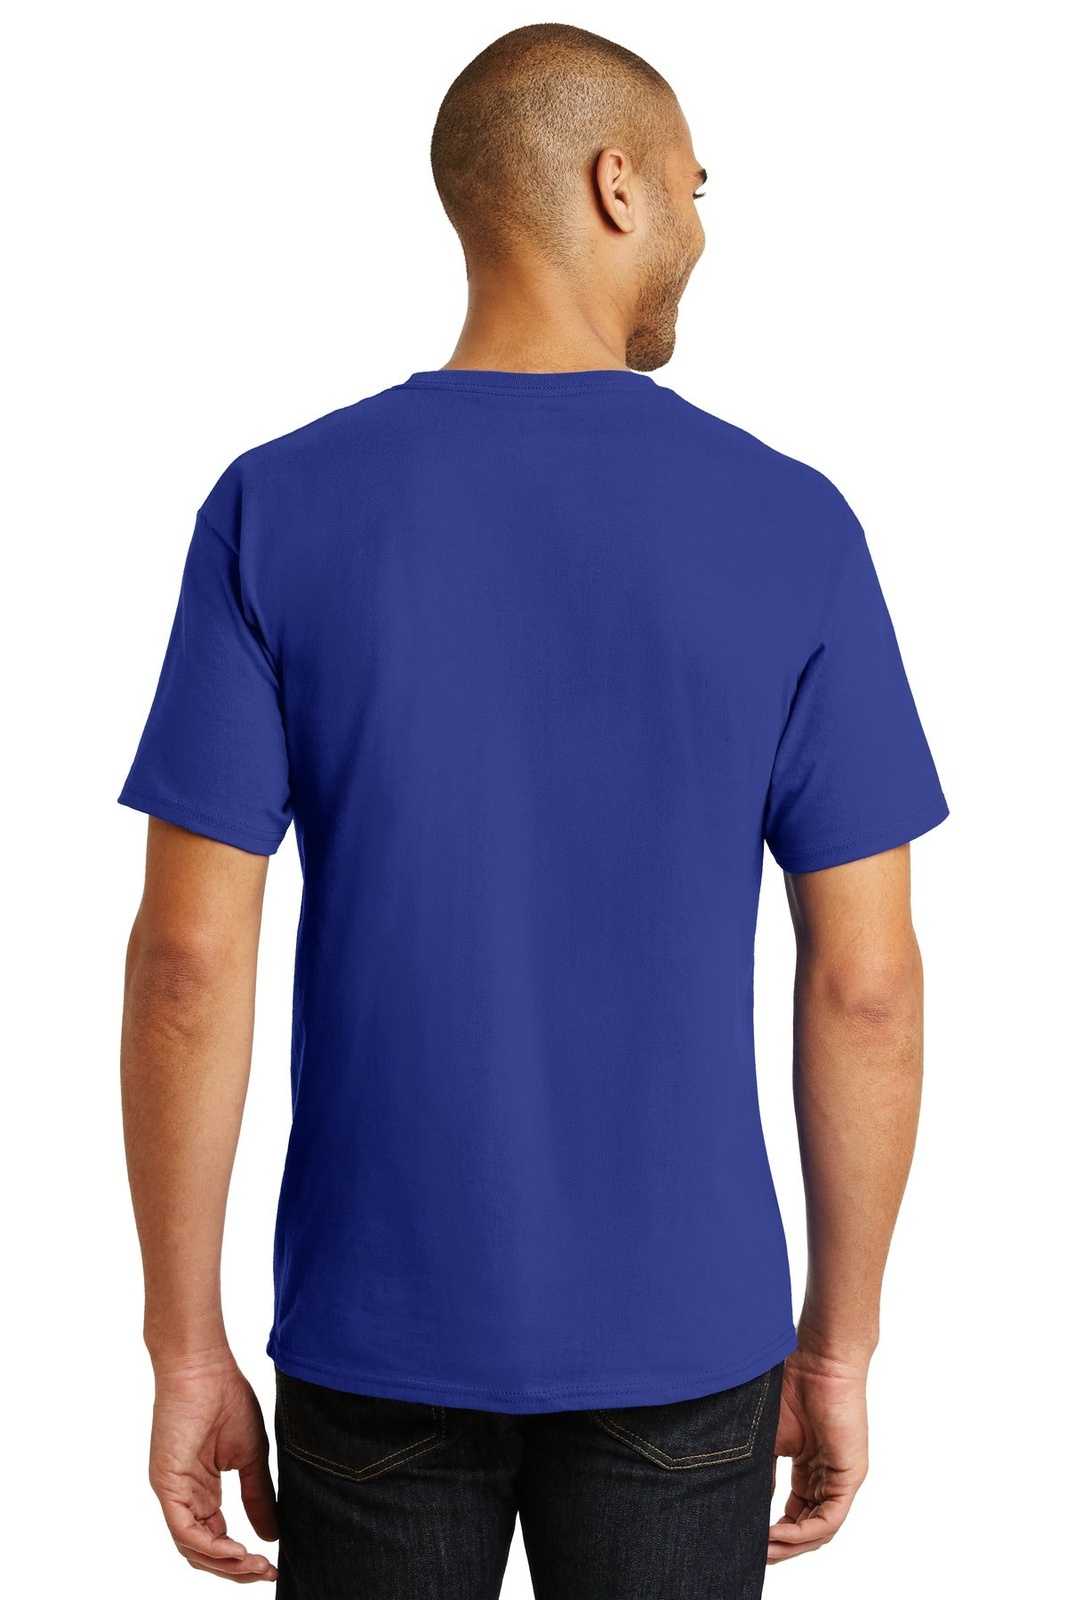 Hanes 5250 Tagless 100% Cotton T-Shirt - Deep Royal - HIT a Double